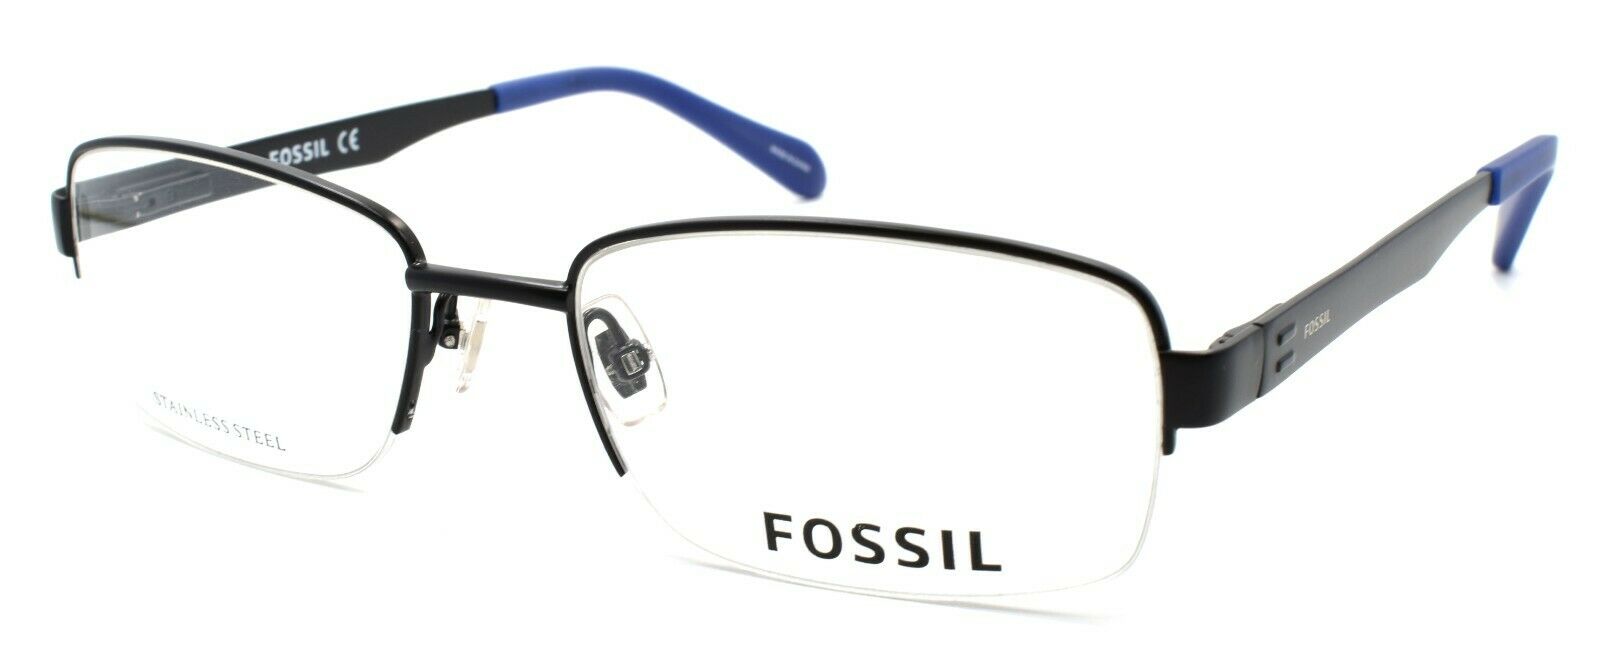 1-Fossil Aldo 0EV7 Men's Eyeglasses Frames Half-rim 52-18-140 Matte Black-716737461976-IKSpecs